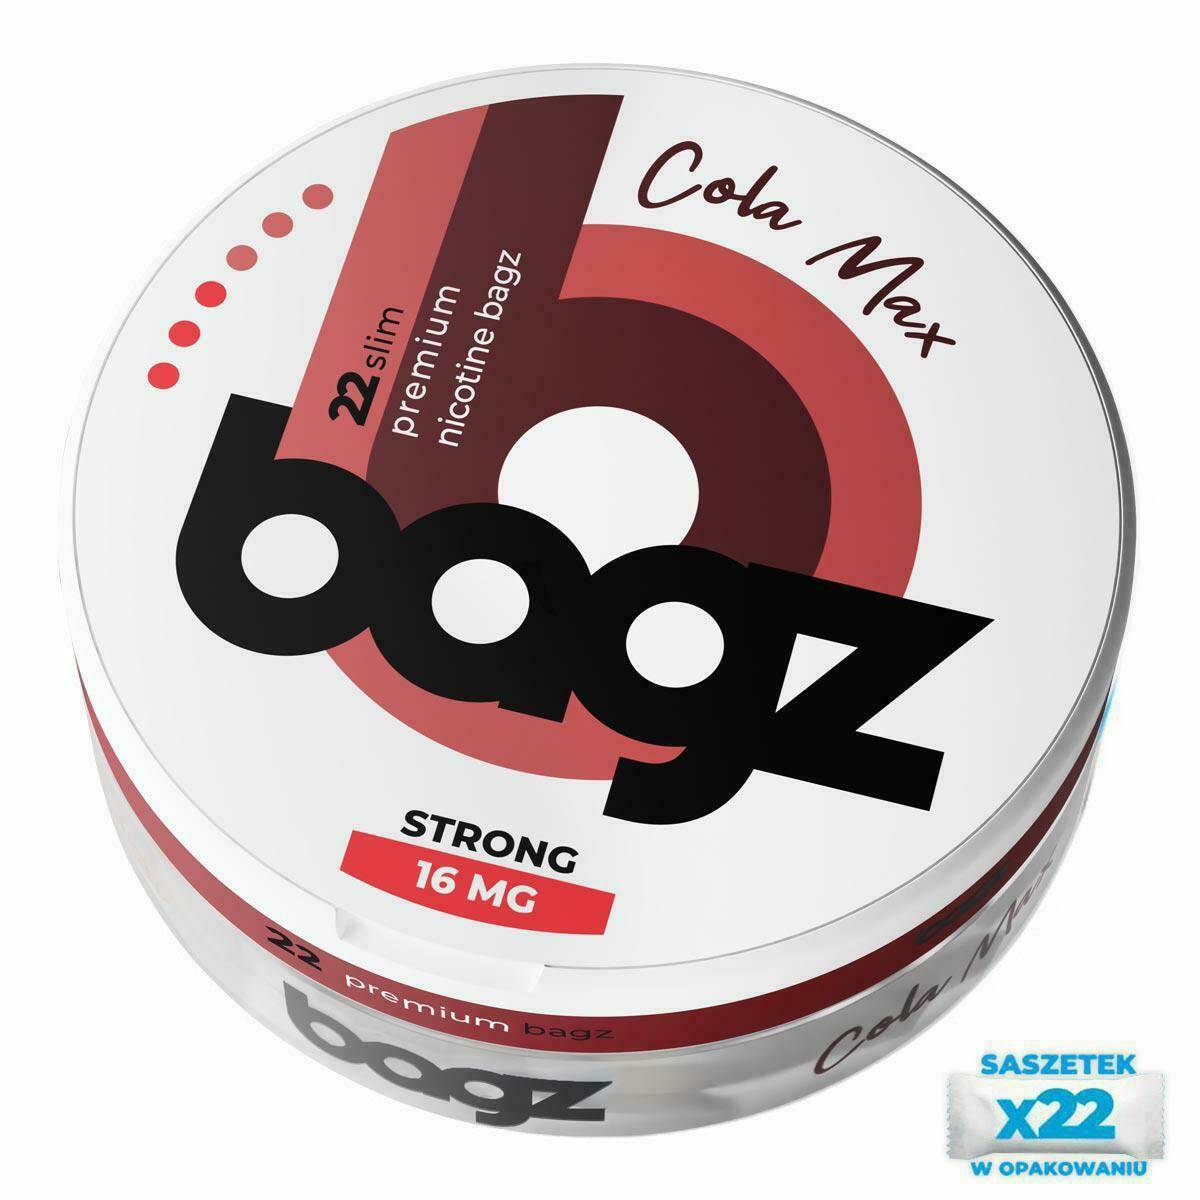 Saszetki nikotynowe BAGZ Cola Max 16mg